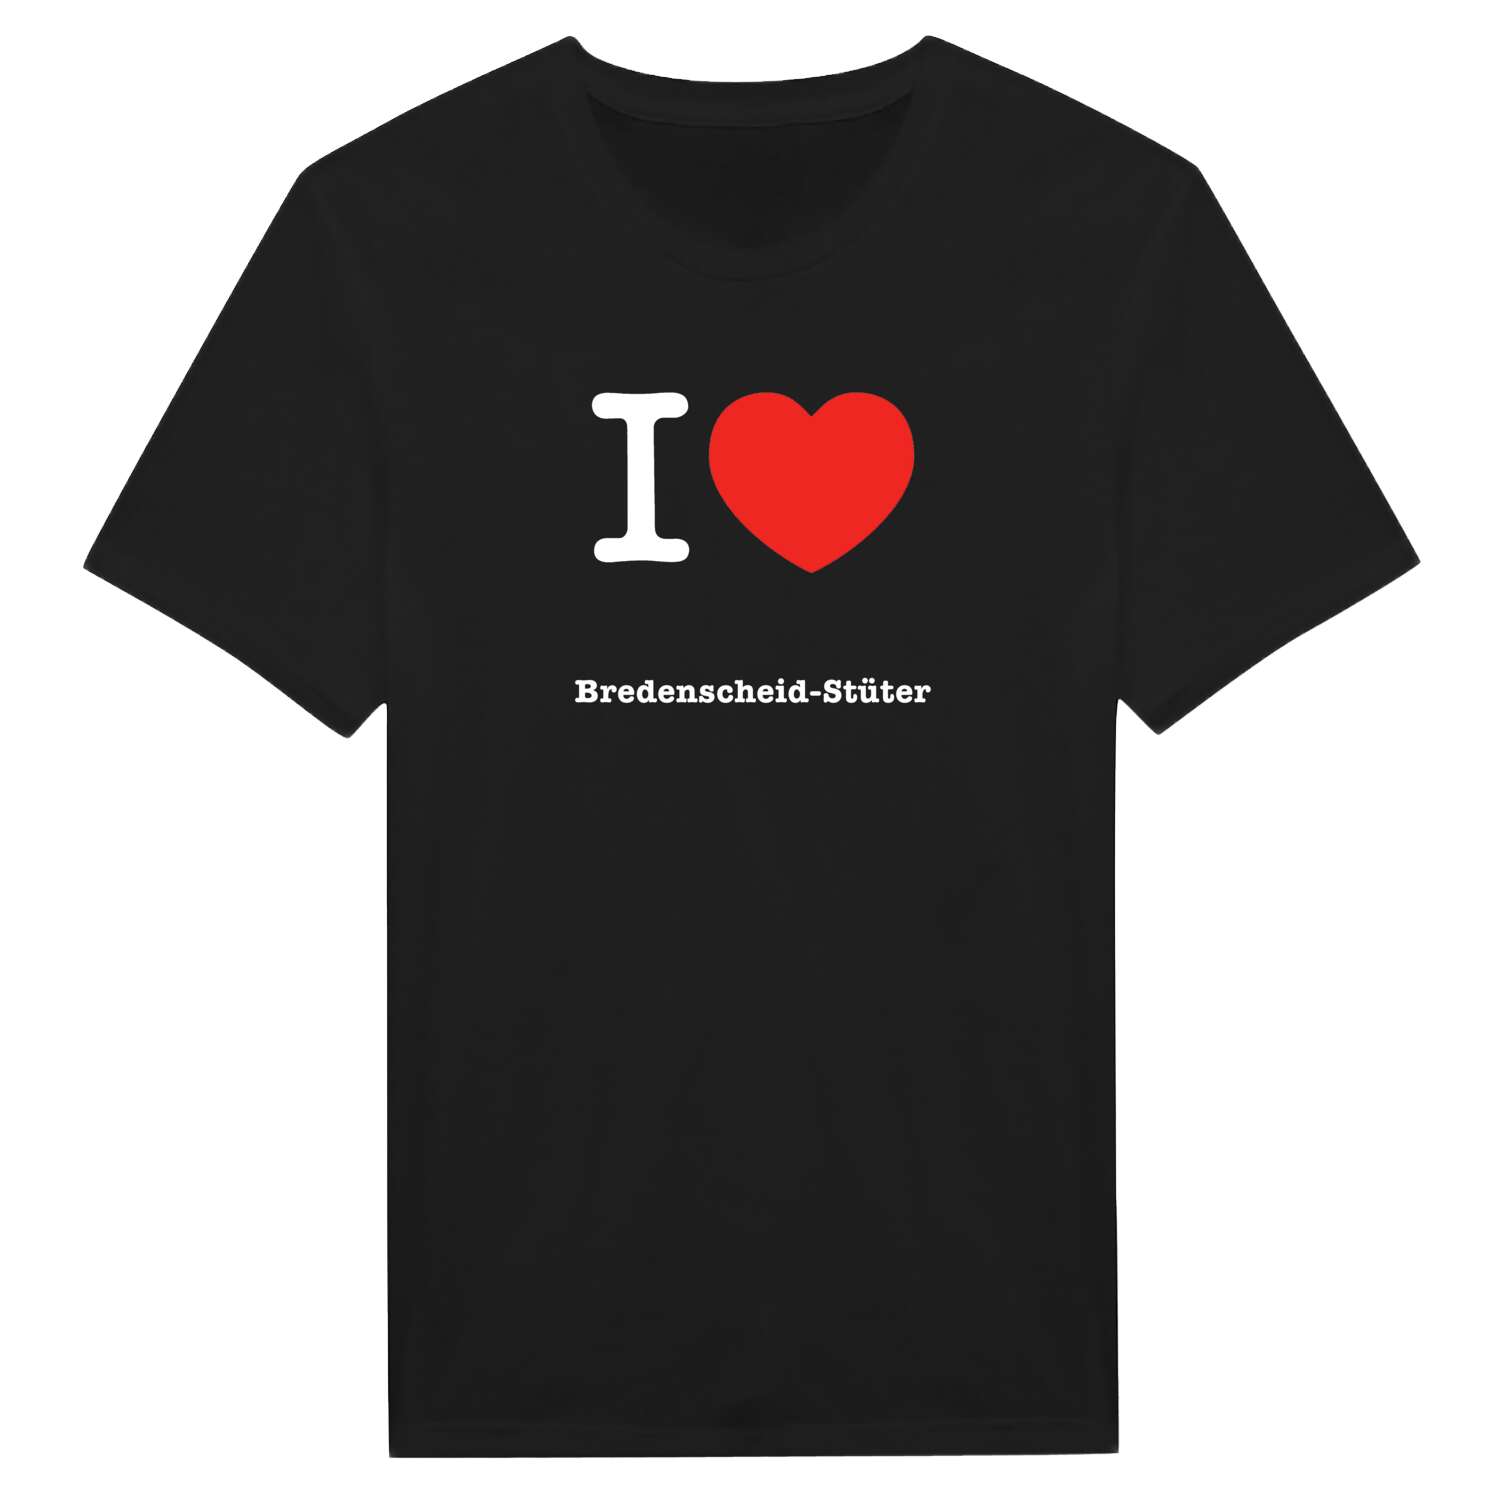 Bredenscheid-Stüter T-Shirt »I love«